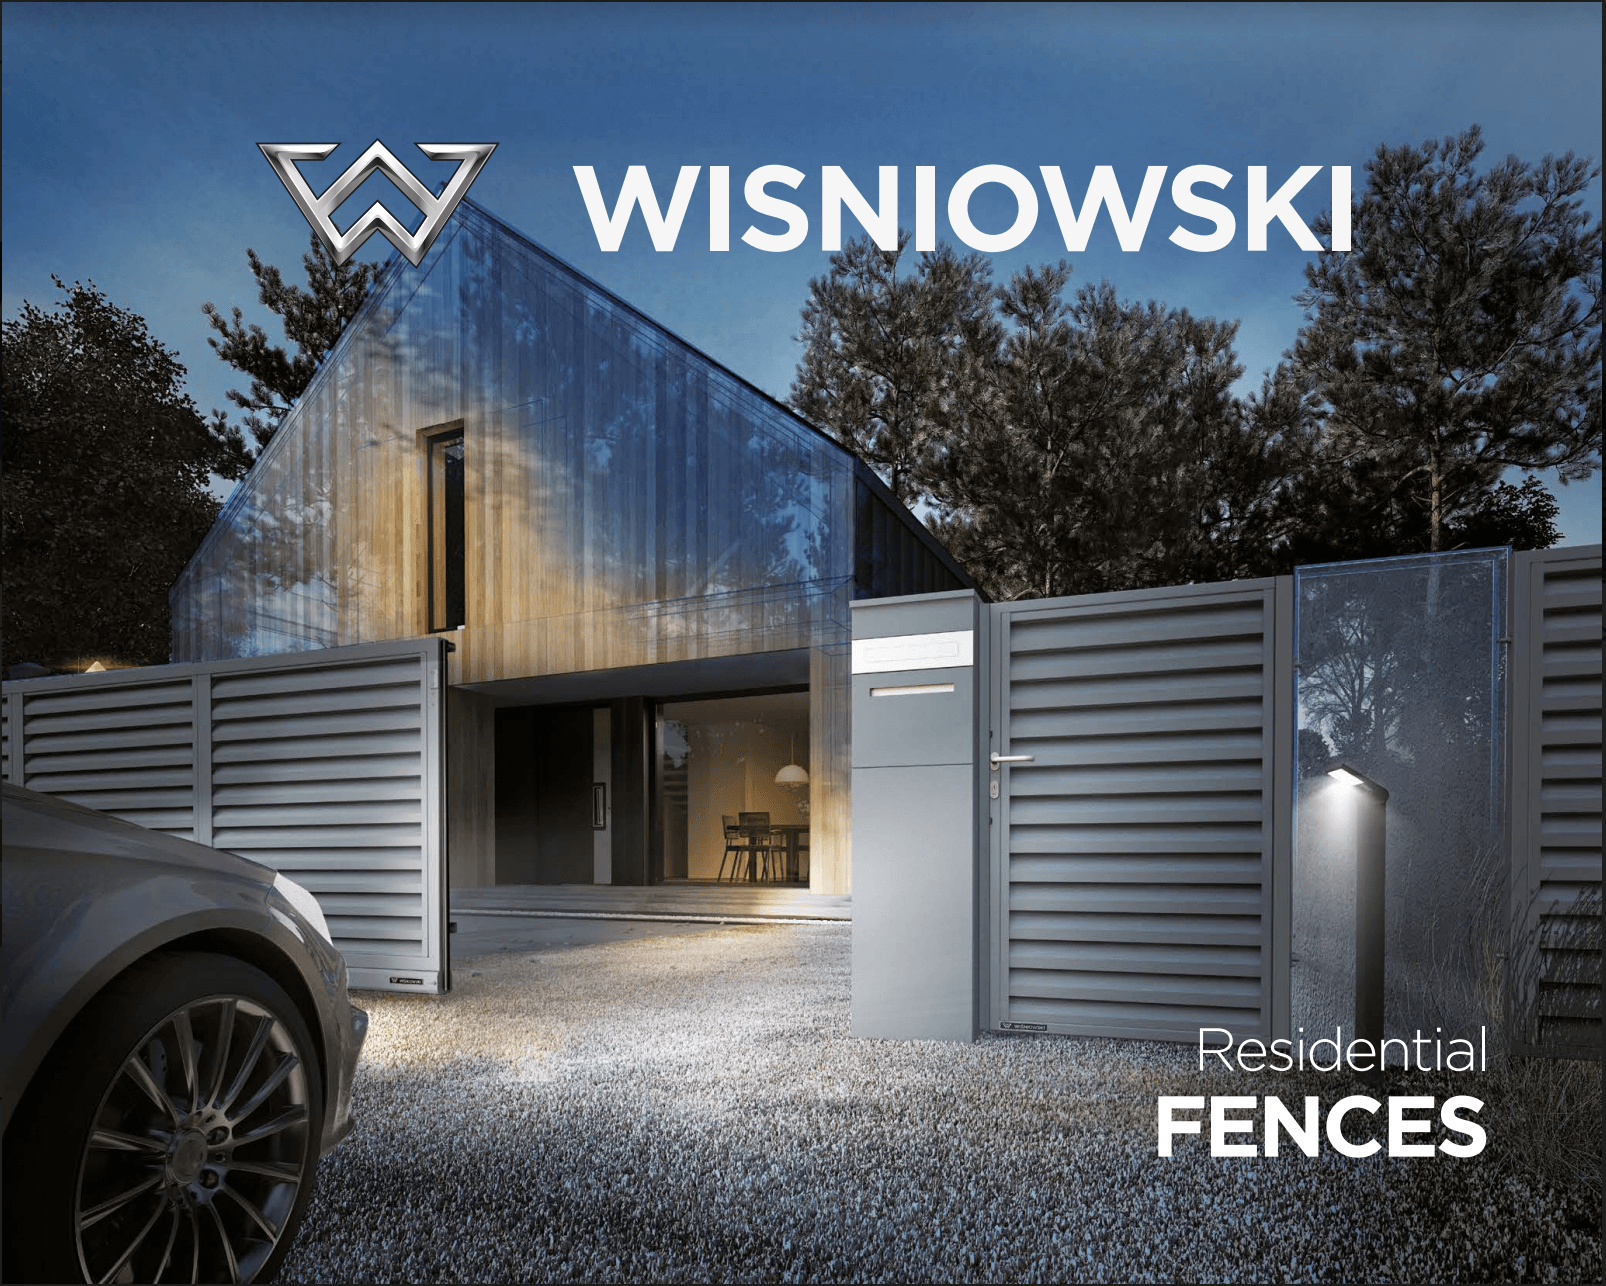 wisniowski industrial fence brochure